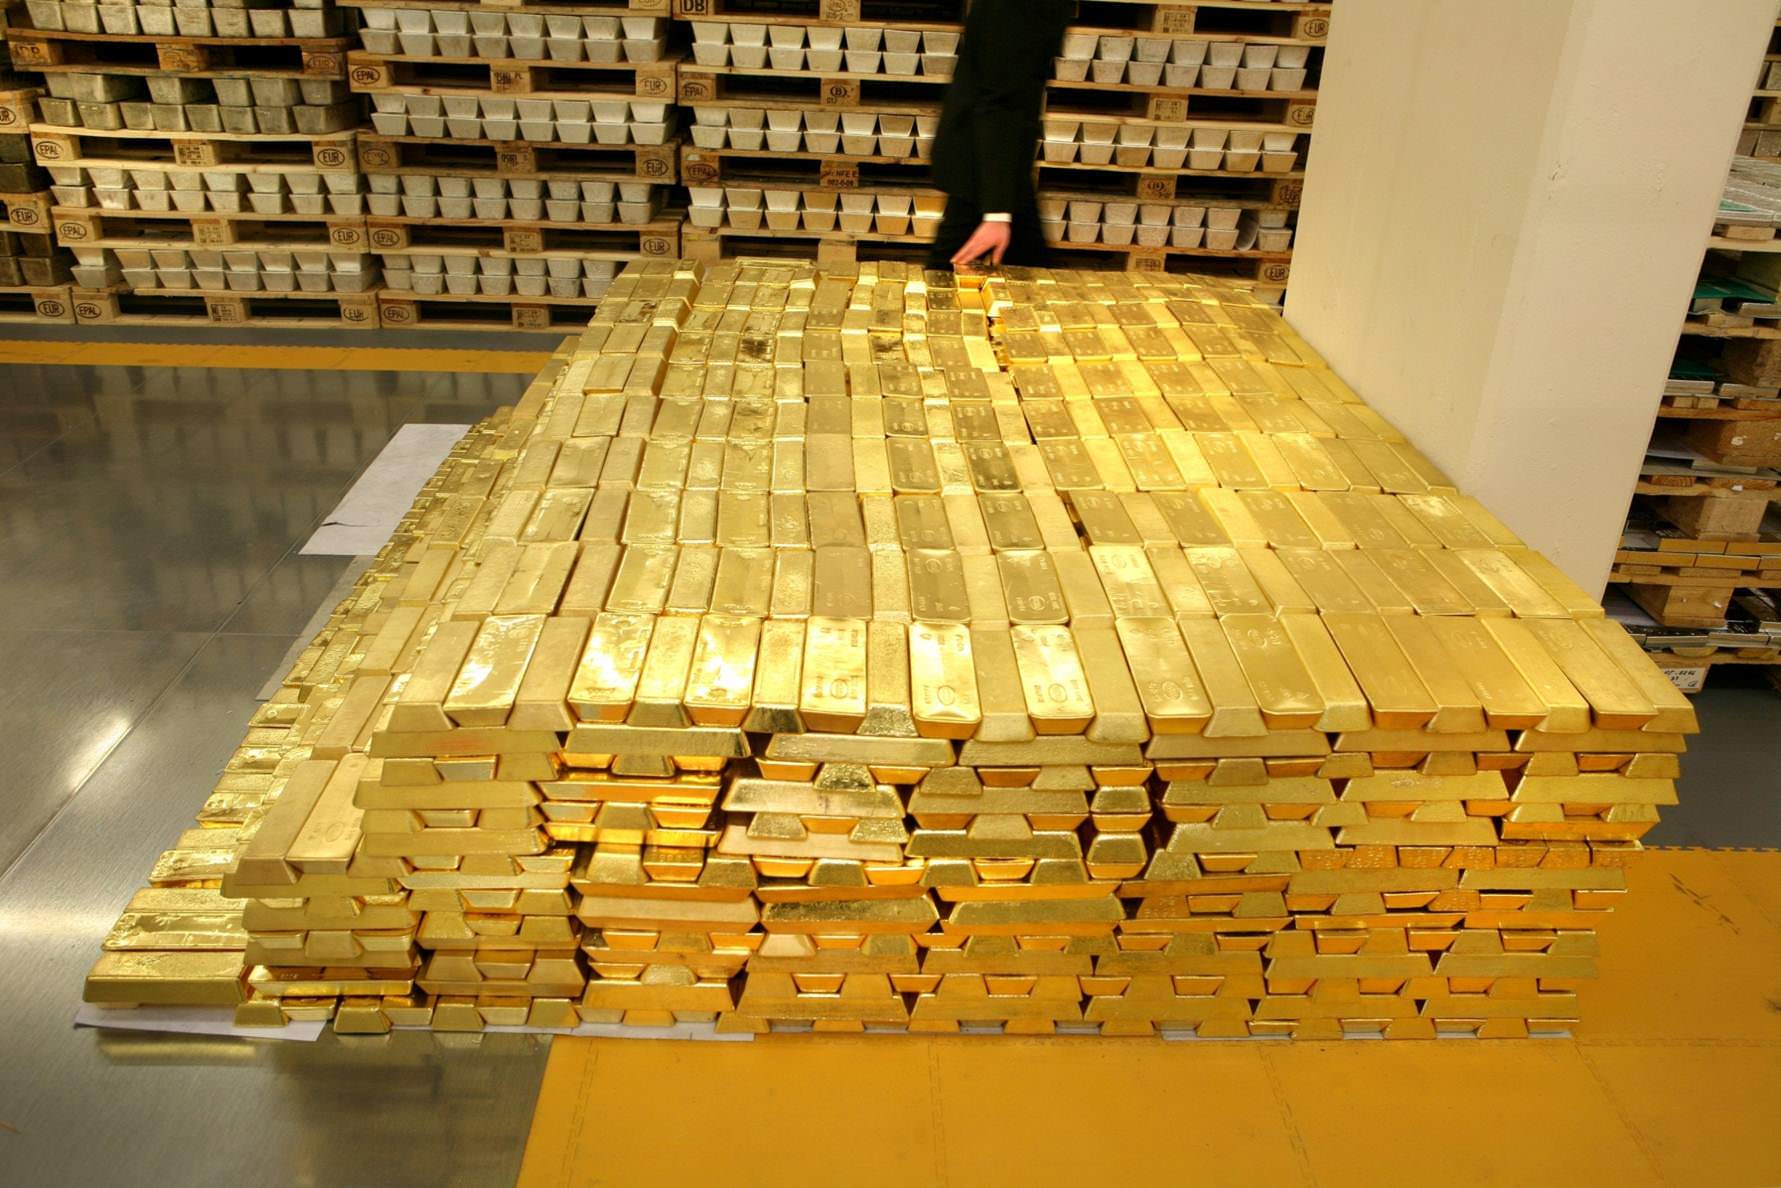 1.6 Billion in gold bars